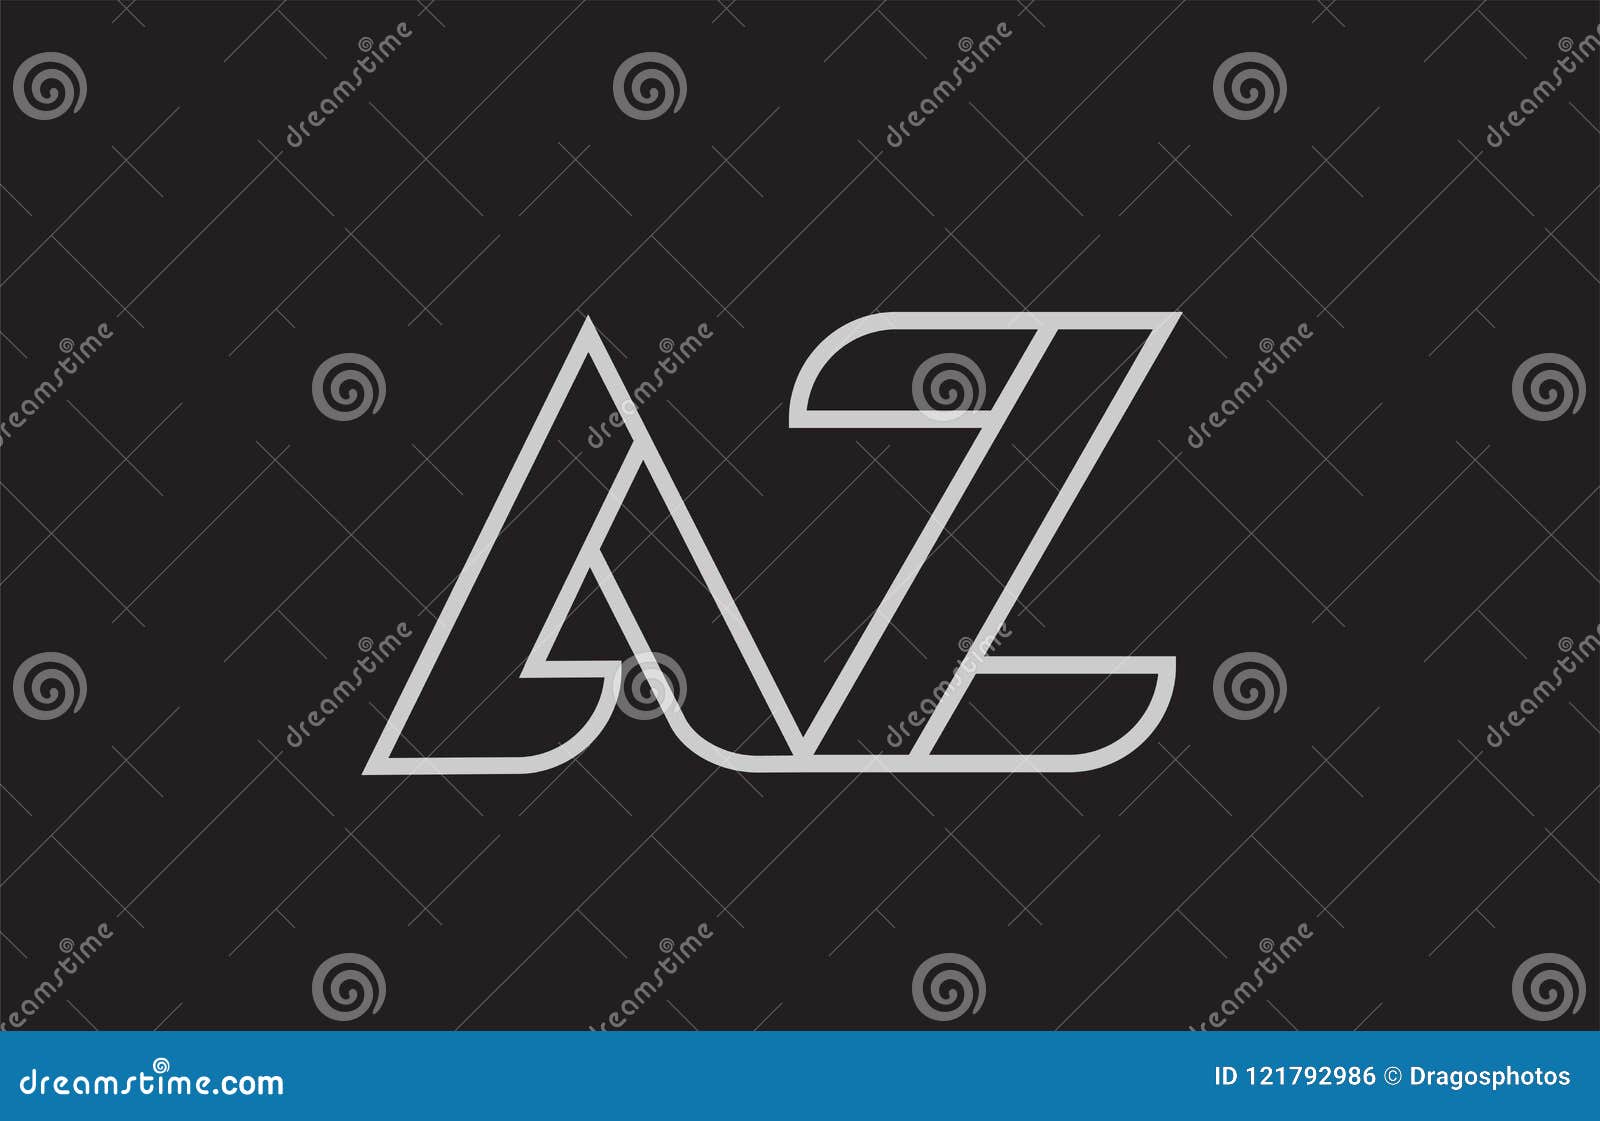 Black and White Alphabet Letter Az a Z Logo Combination Stock Vector ...